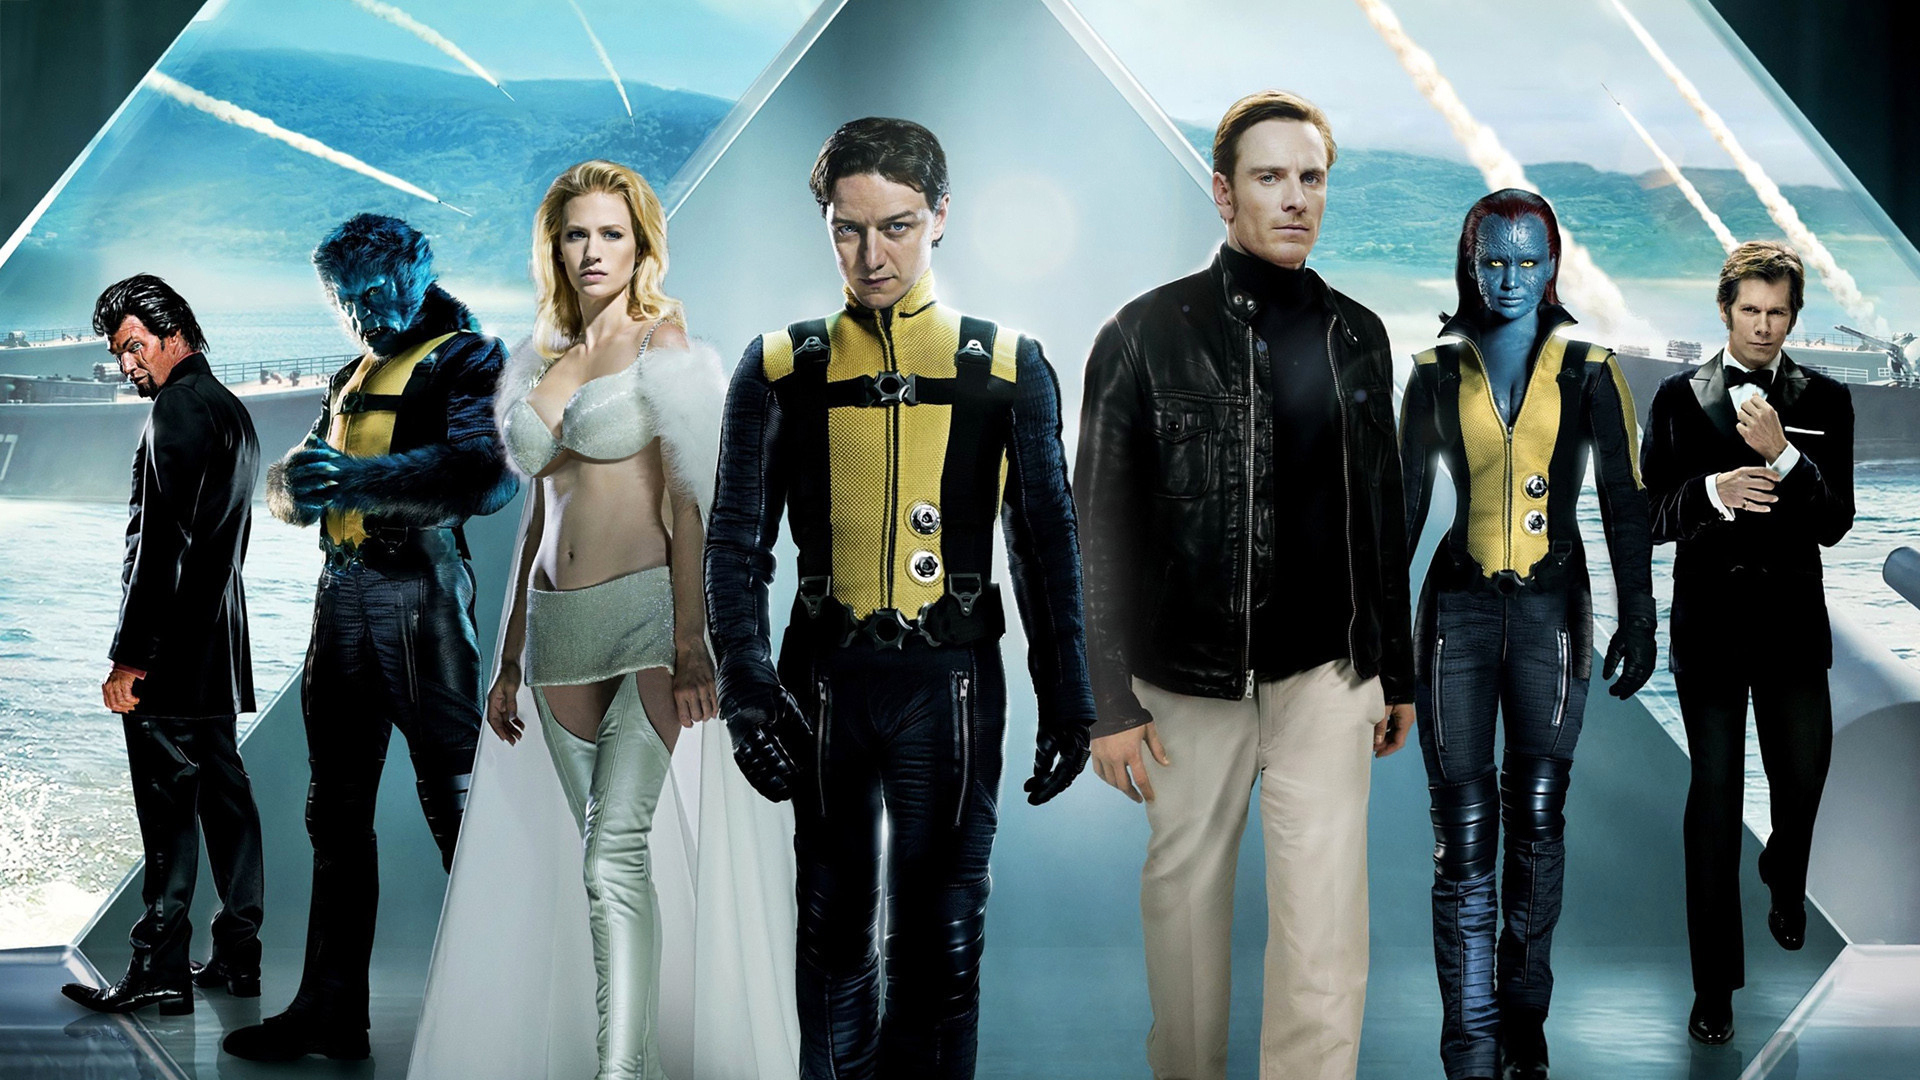 Movie X-Men: First Class HD Wallpaper | Background Image